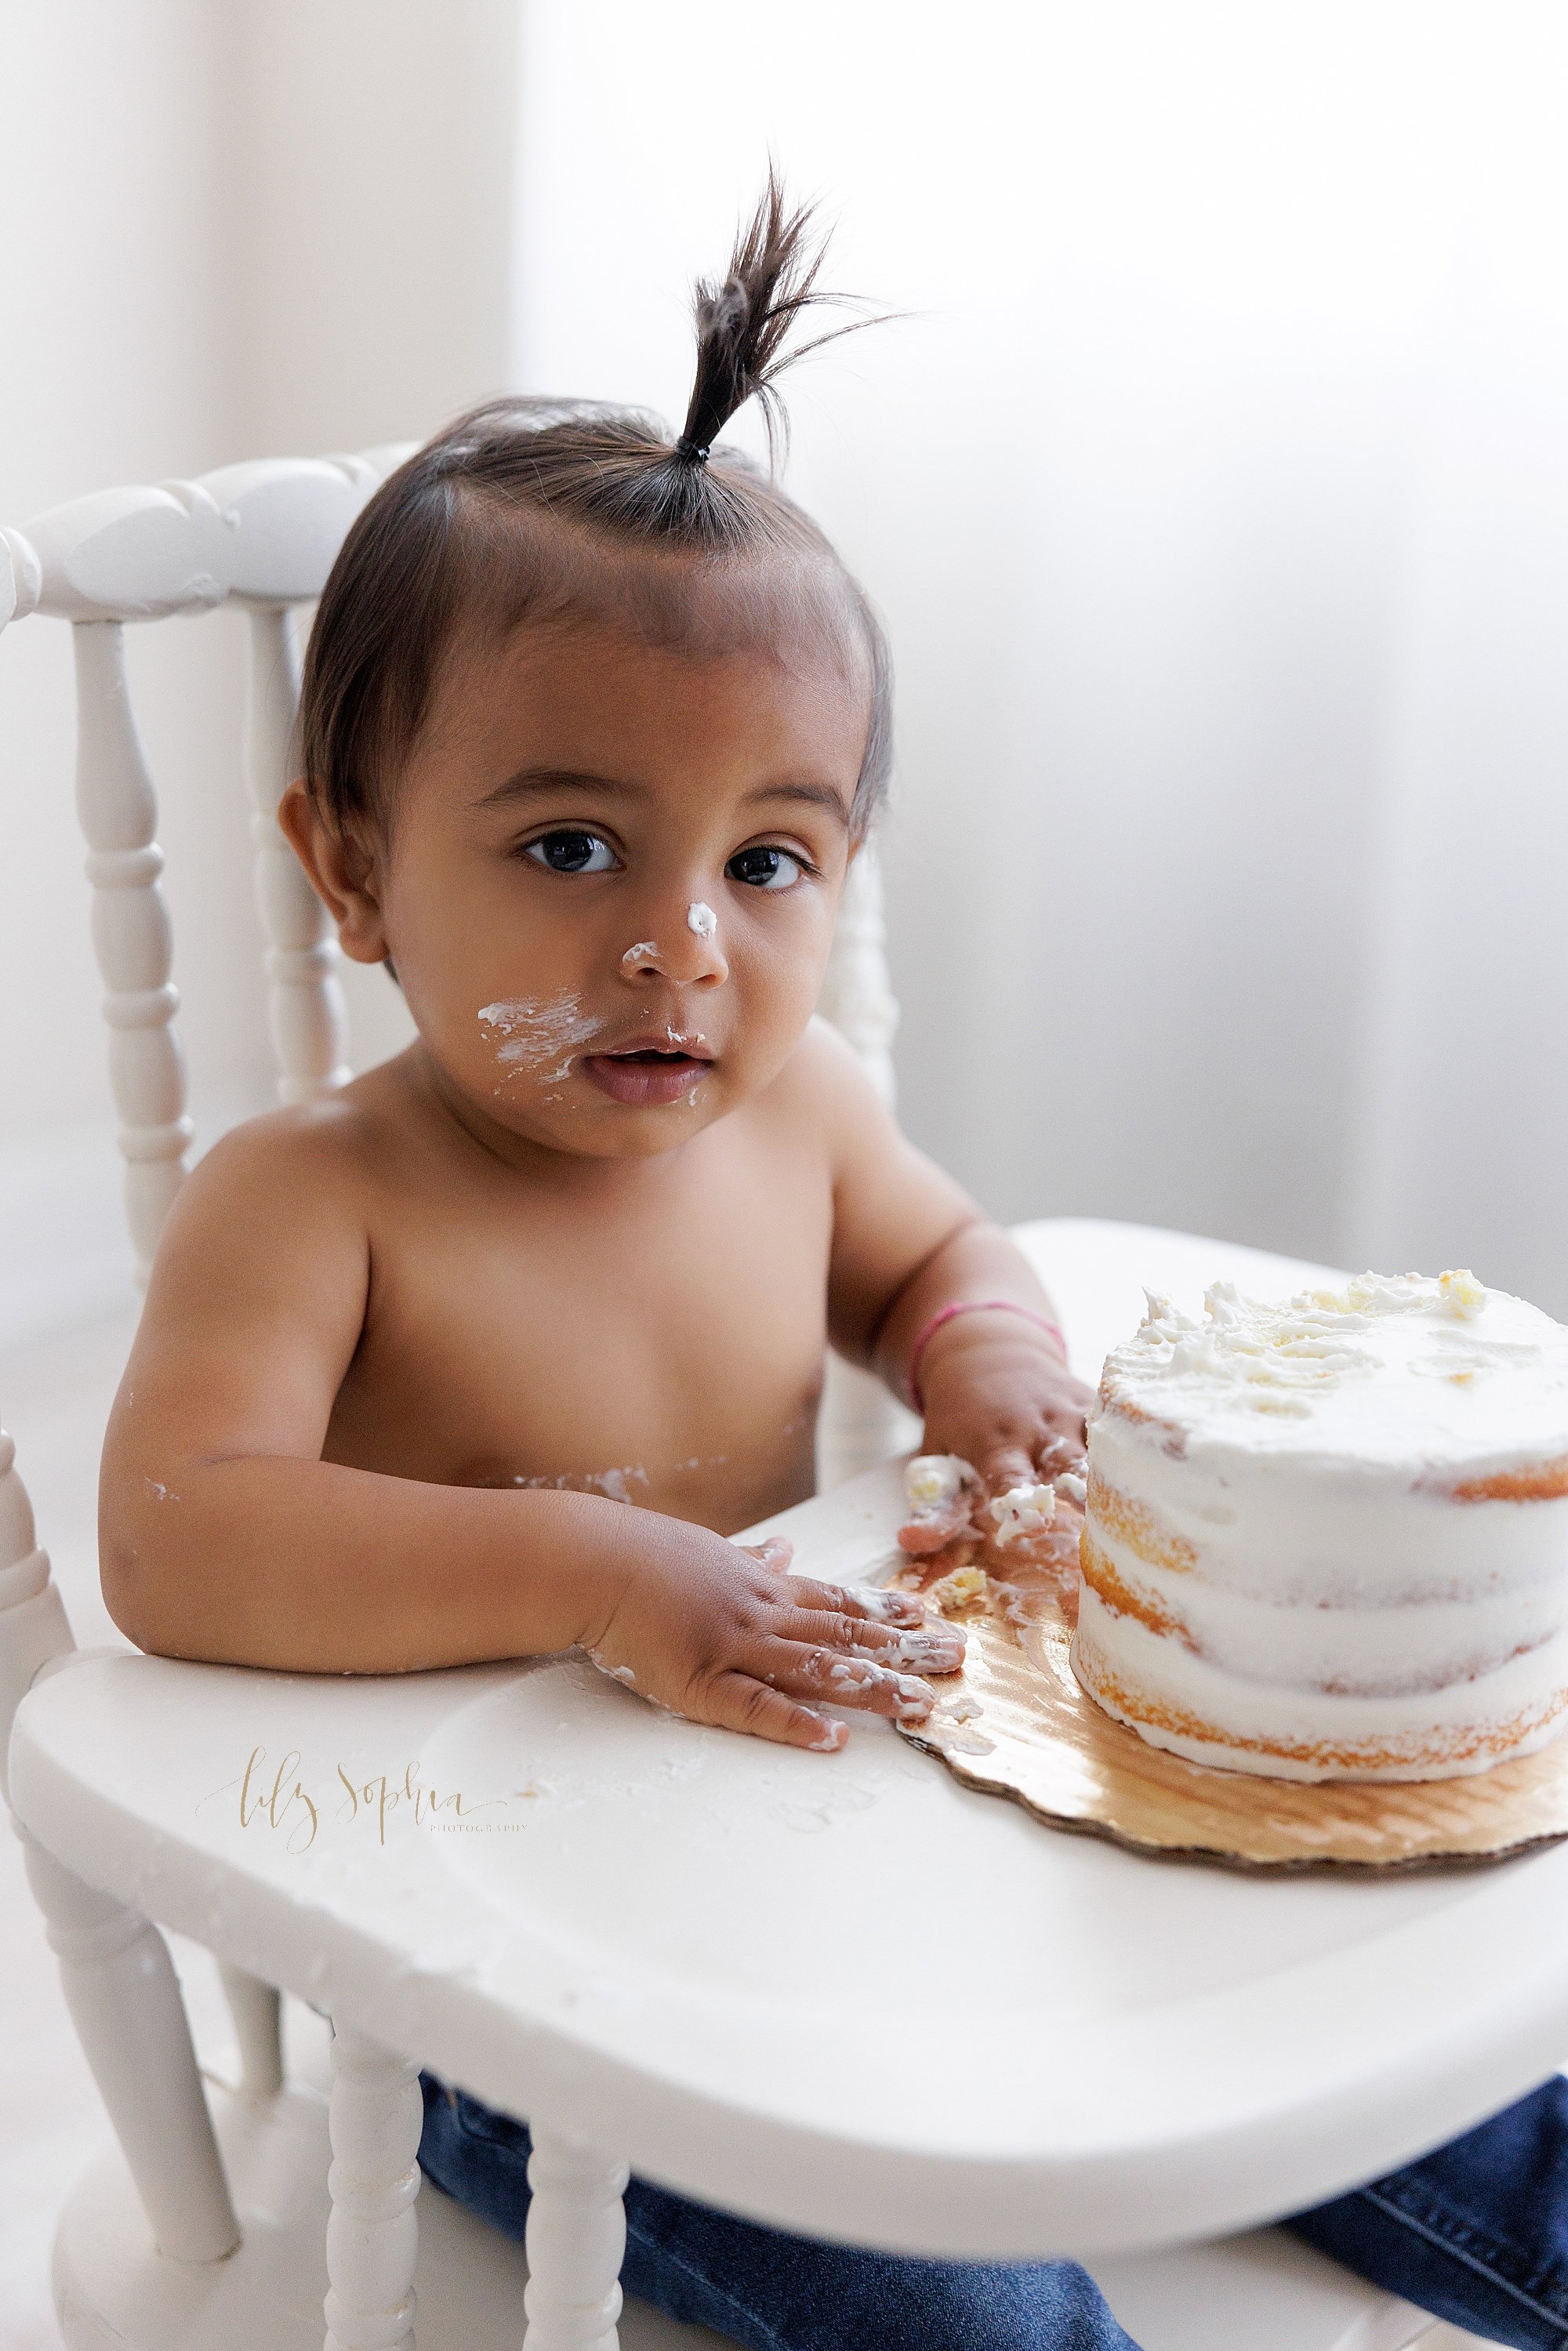 intown-atlanta-decatur-brookhaven-buckhead-first-birthday-cake-smash-family-photoshoot-baby-boy_5442.jpg